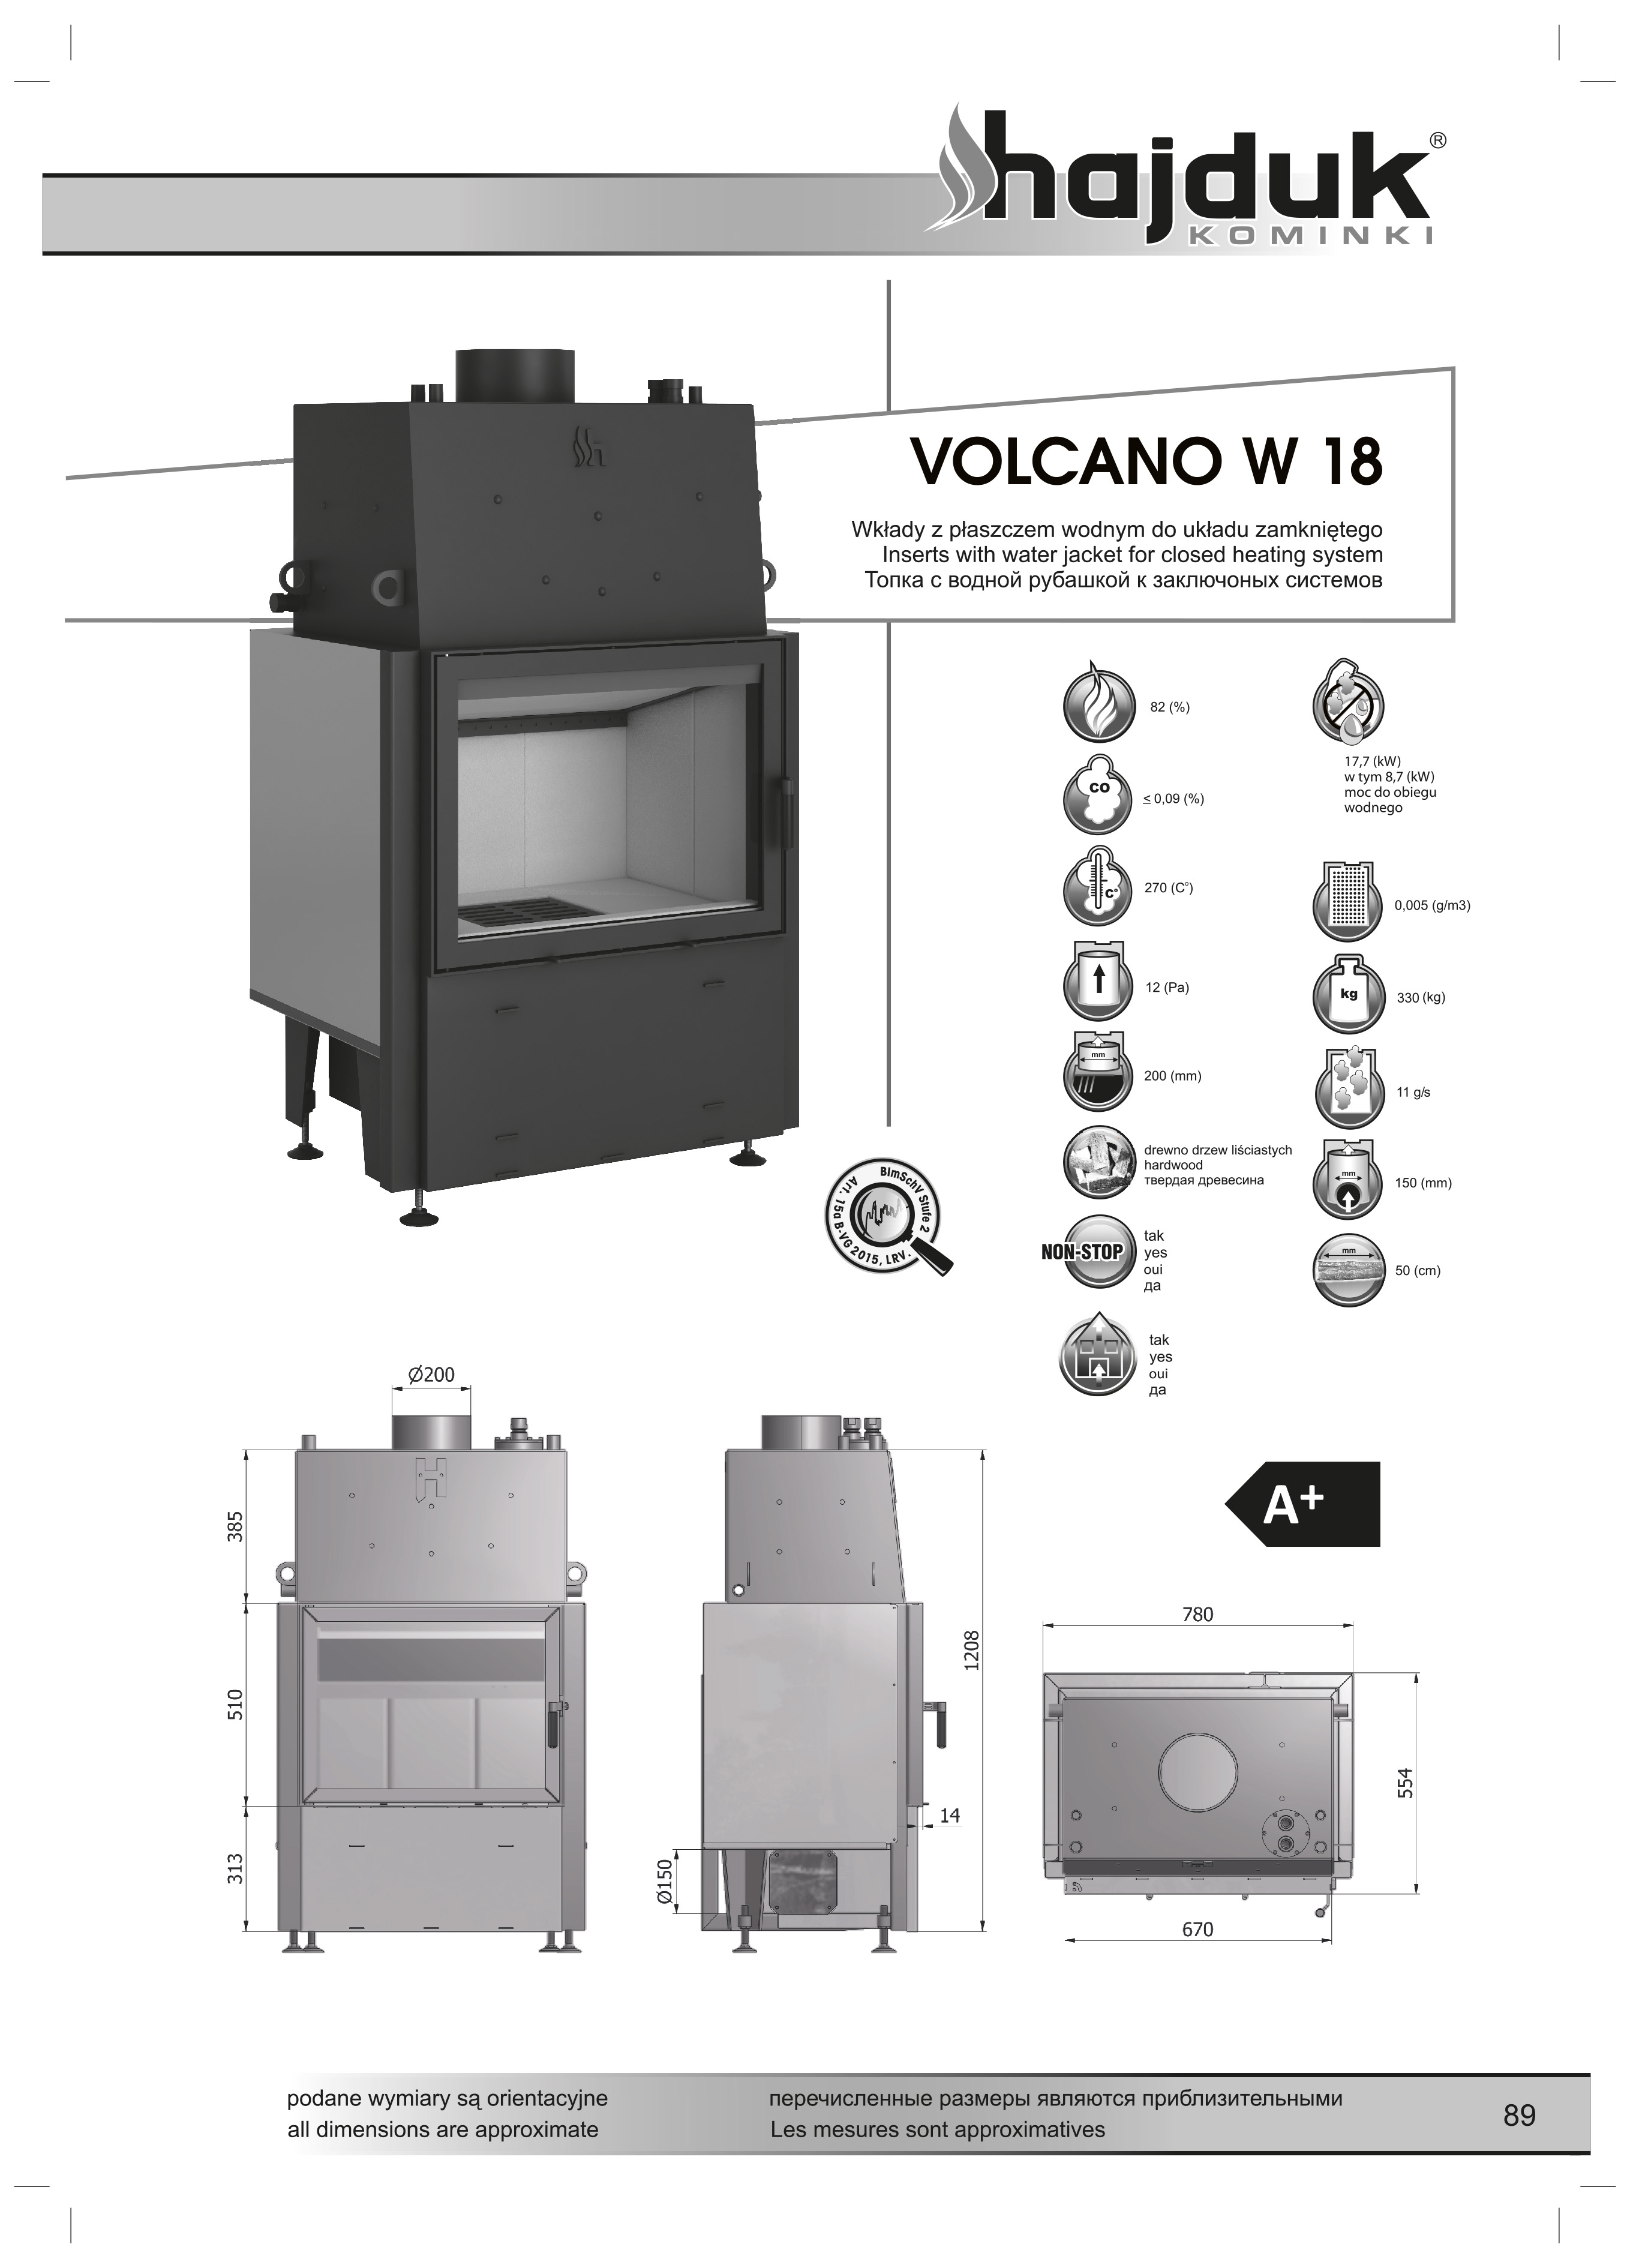 Volcano W18 - karta techniczna.jpg